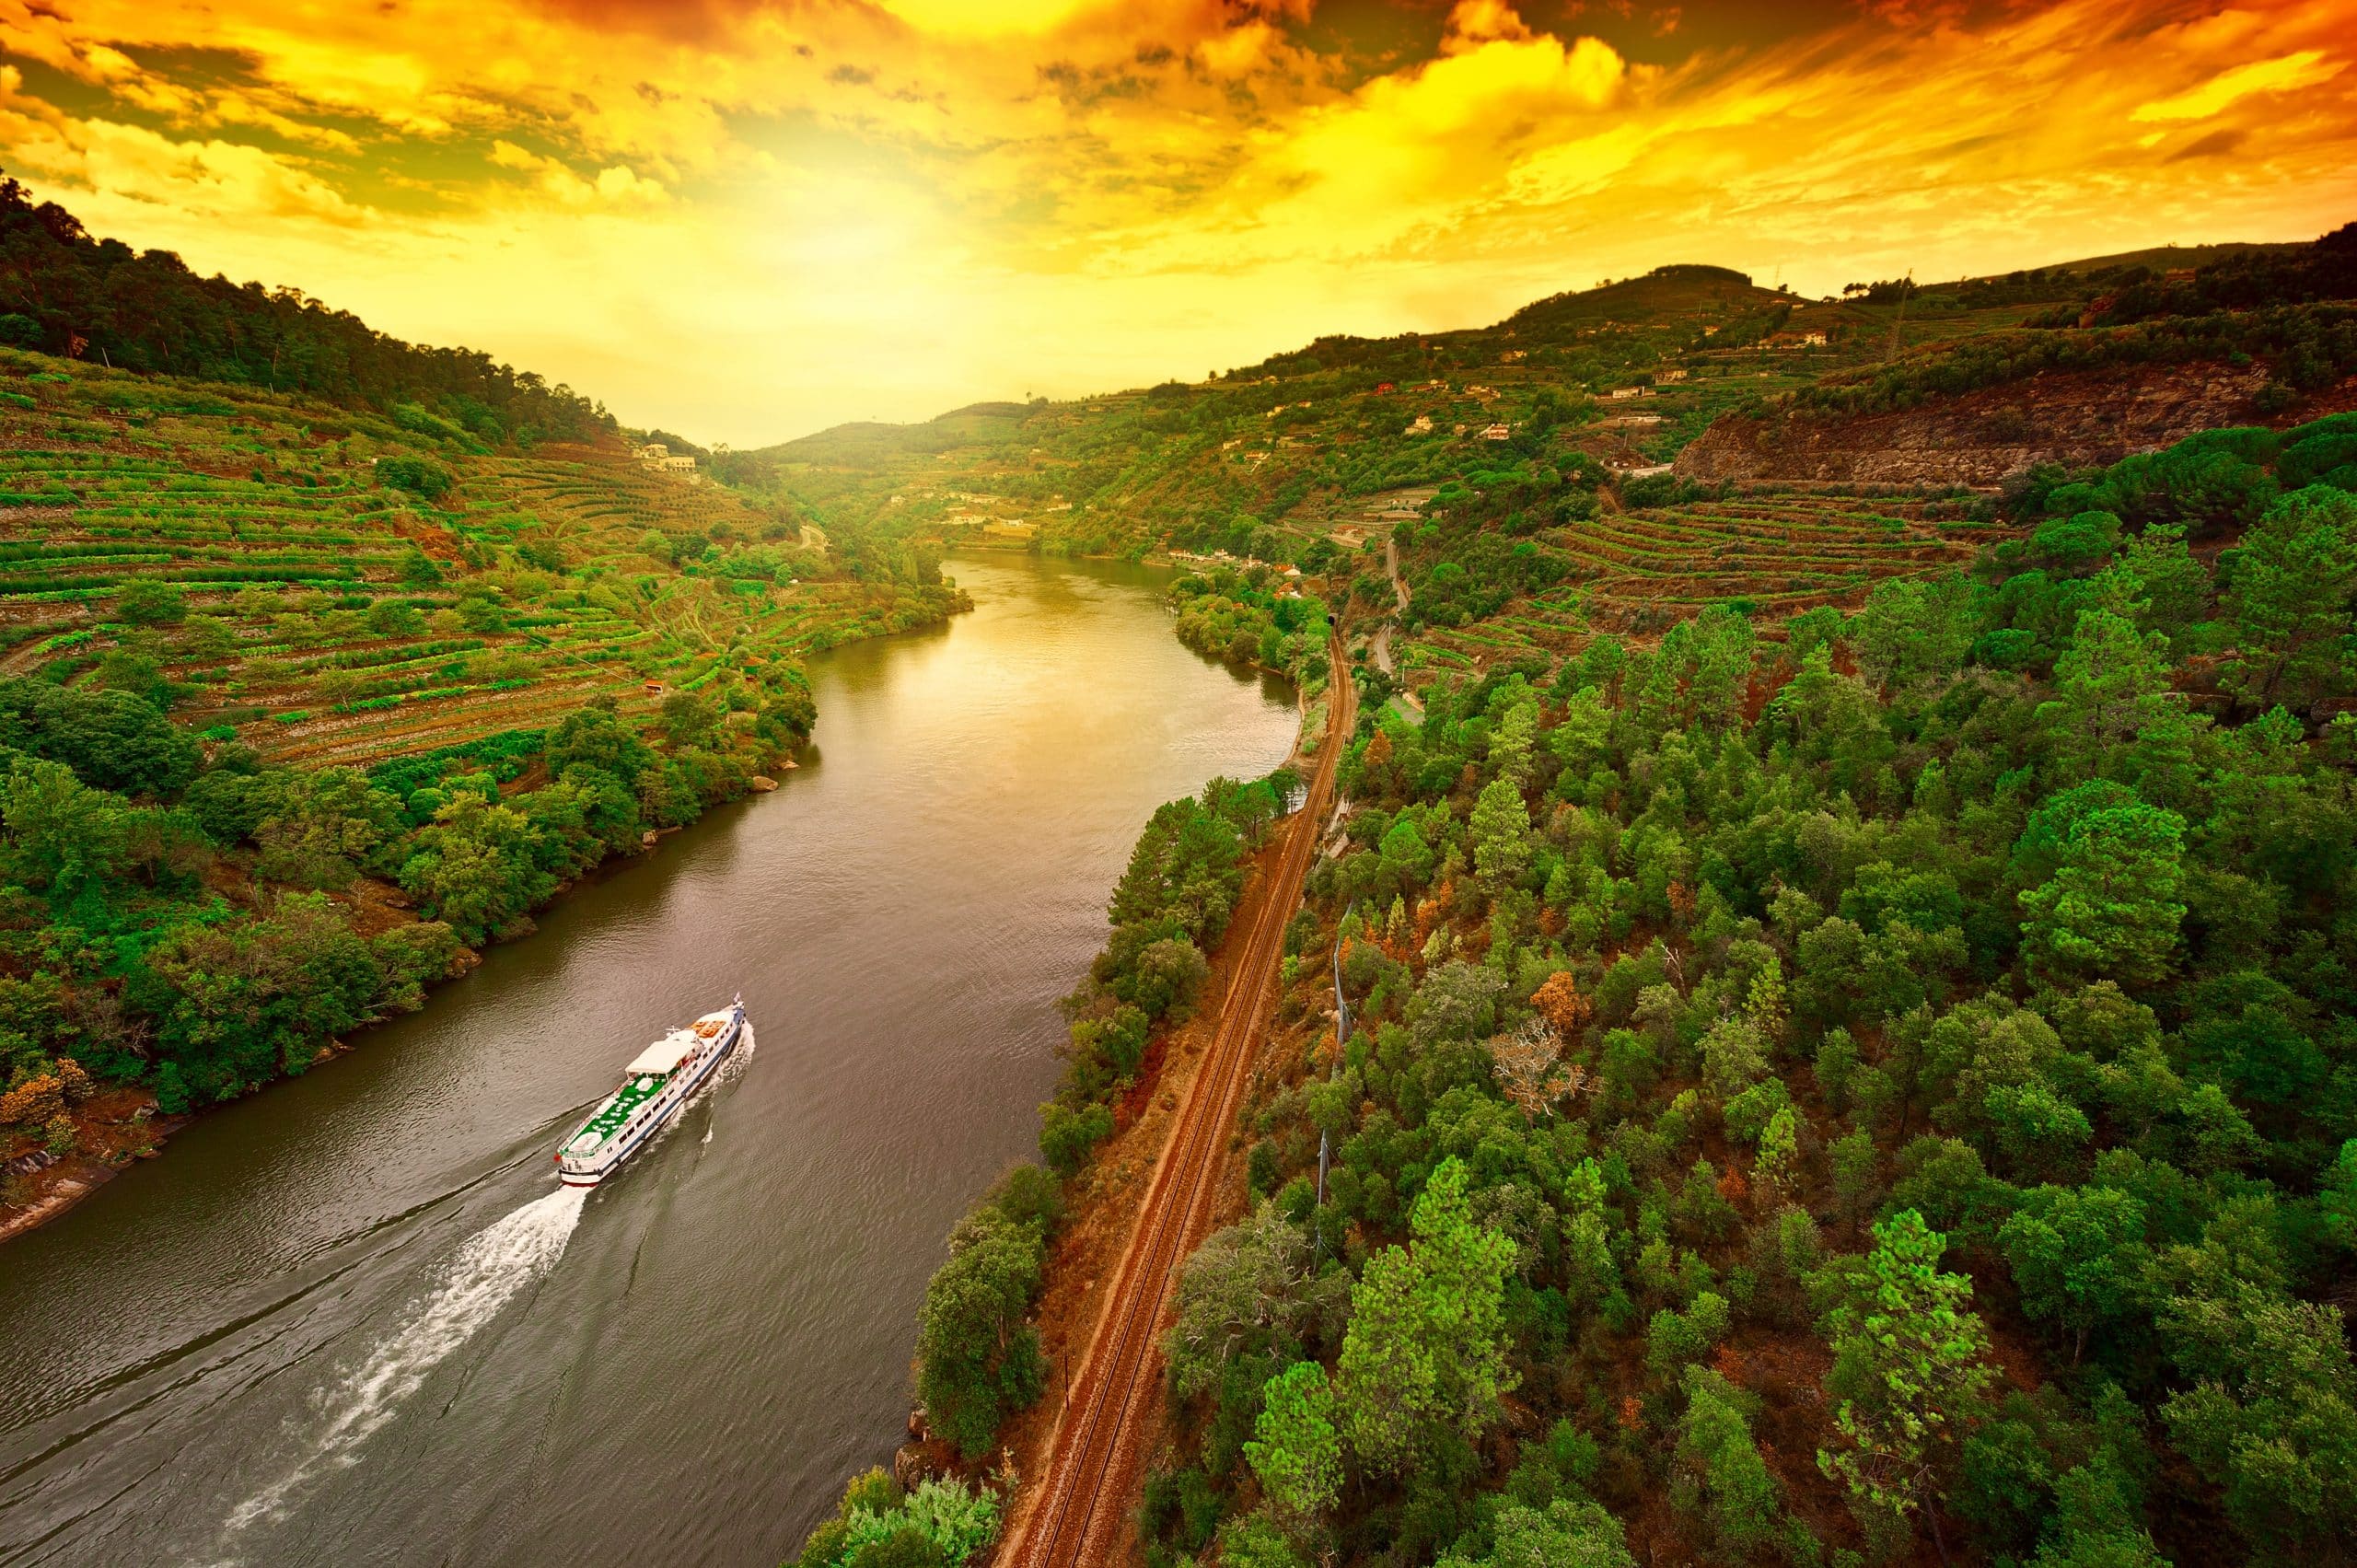 riviera travel offers